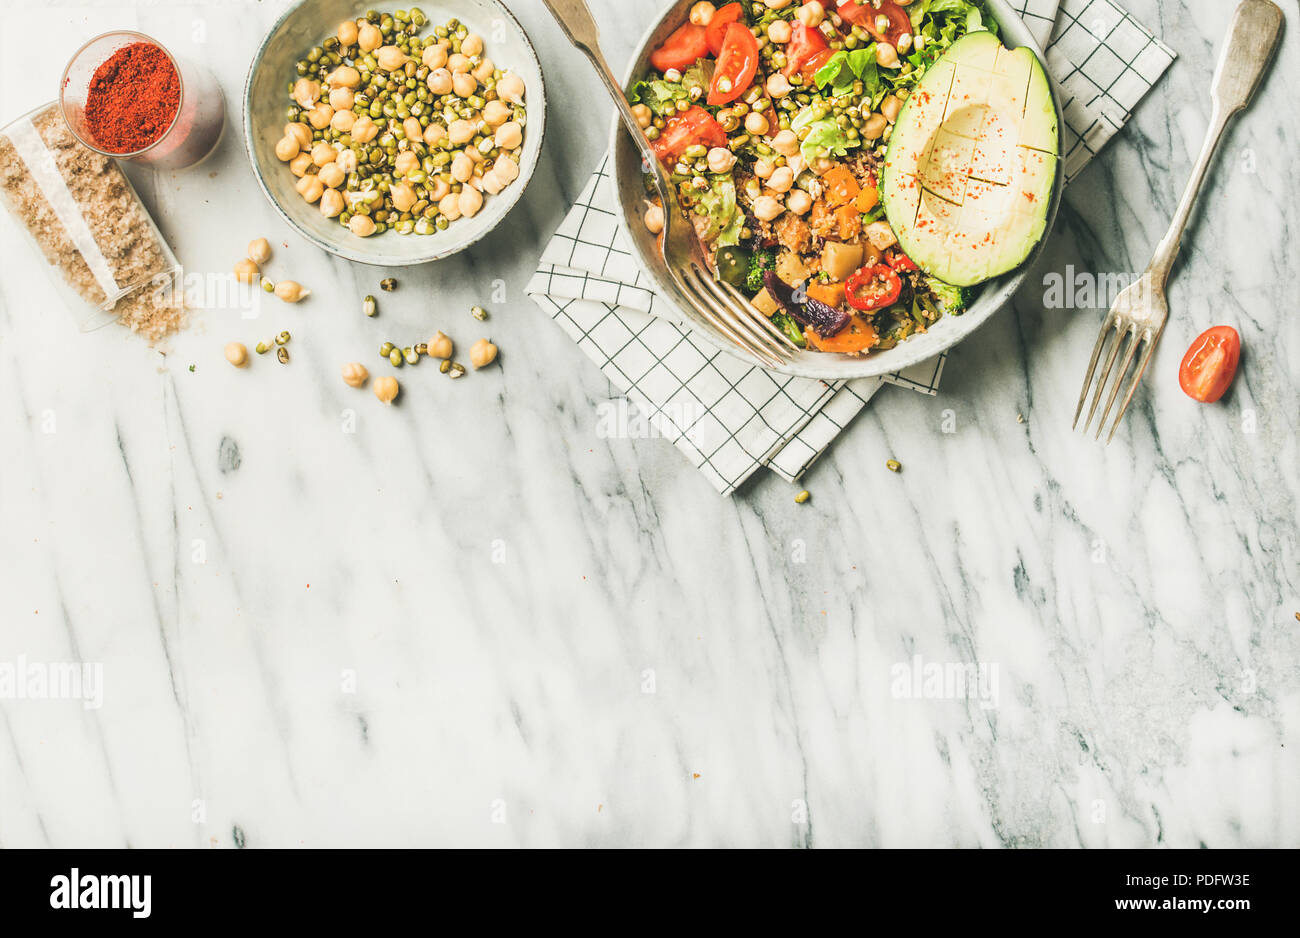 Vegan dinner bowl with avocado, grains, beans, vegetables, copy space Stock Photo